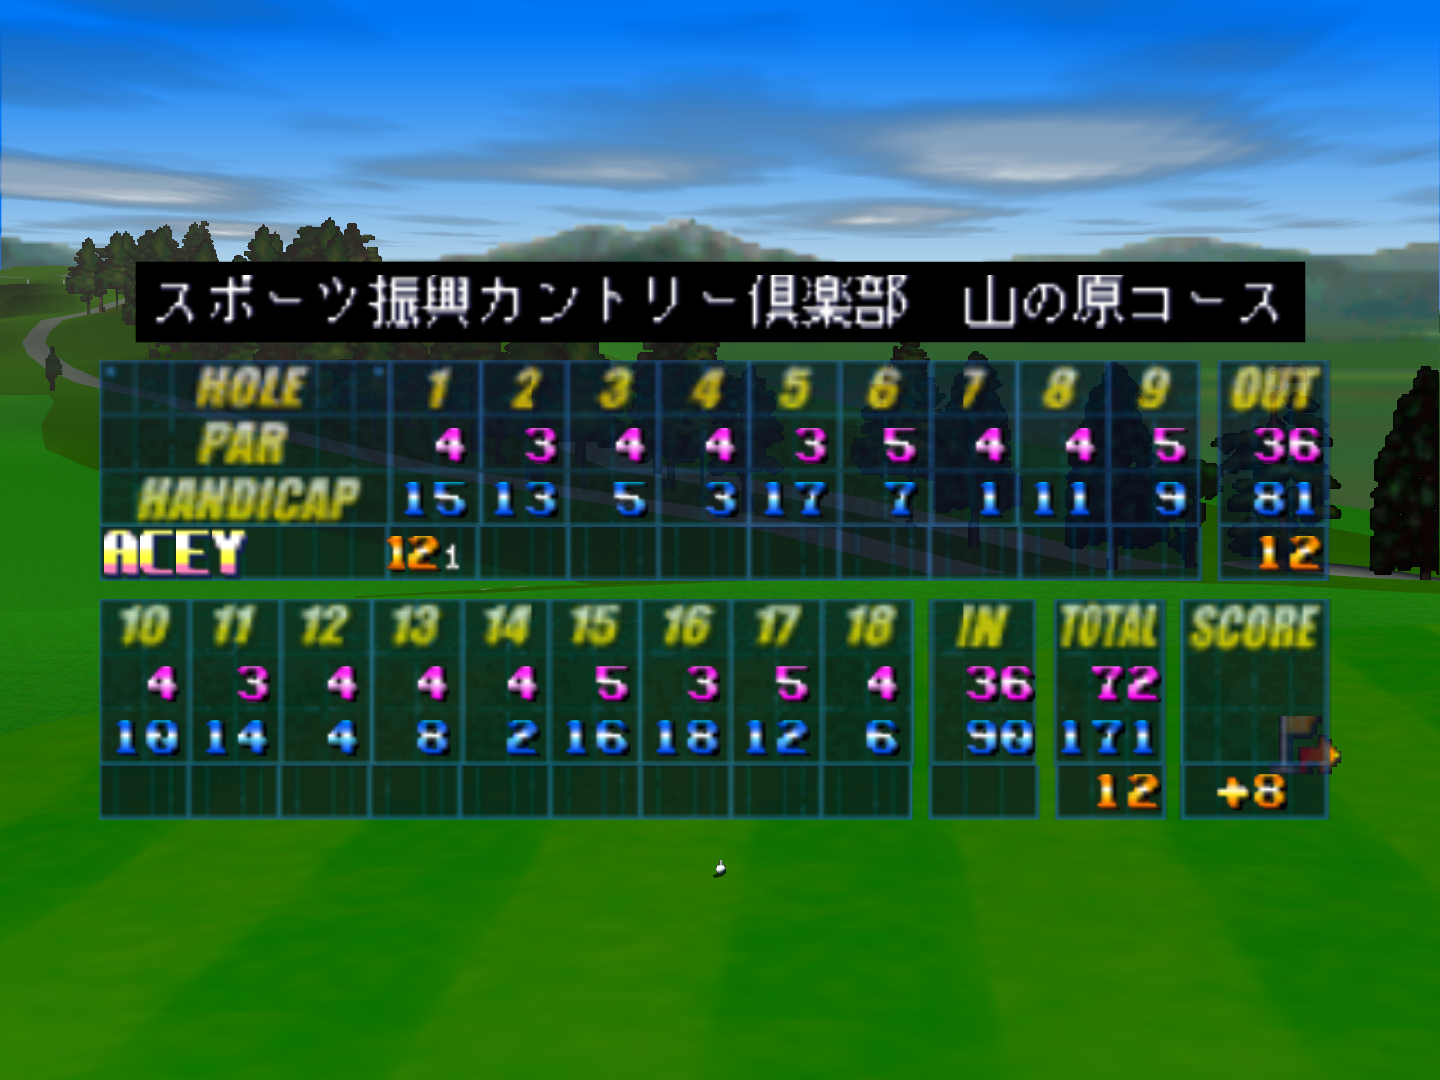 japan pro golf tour 64 price